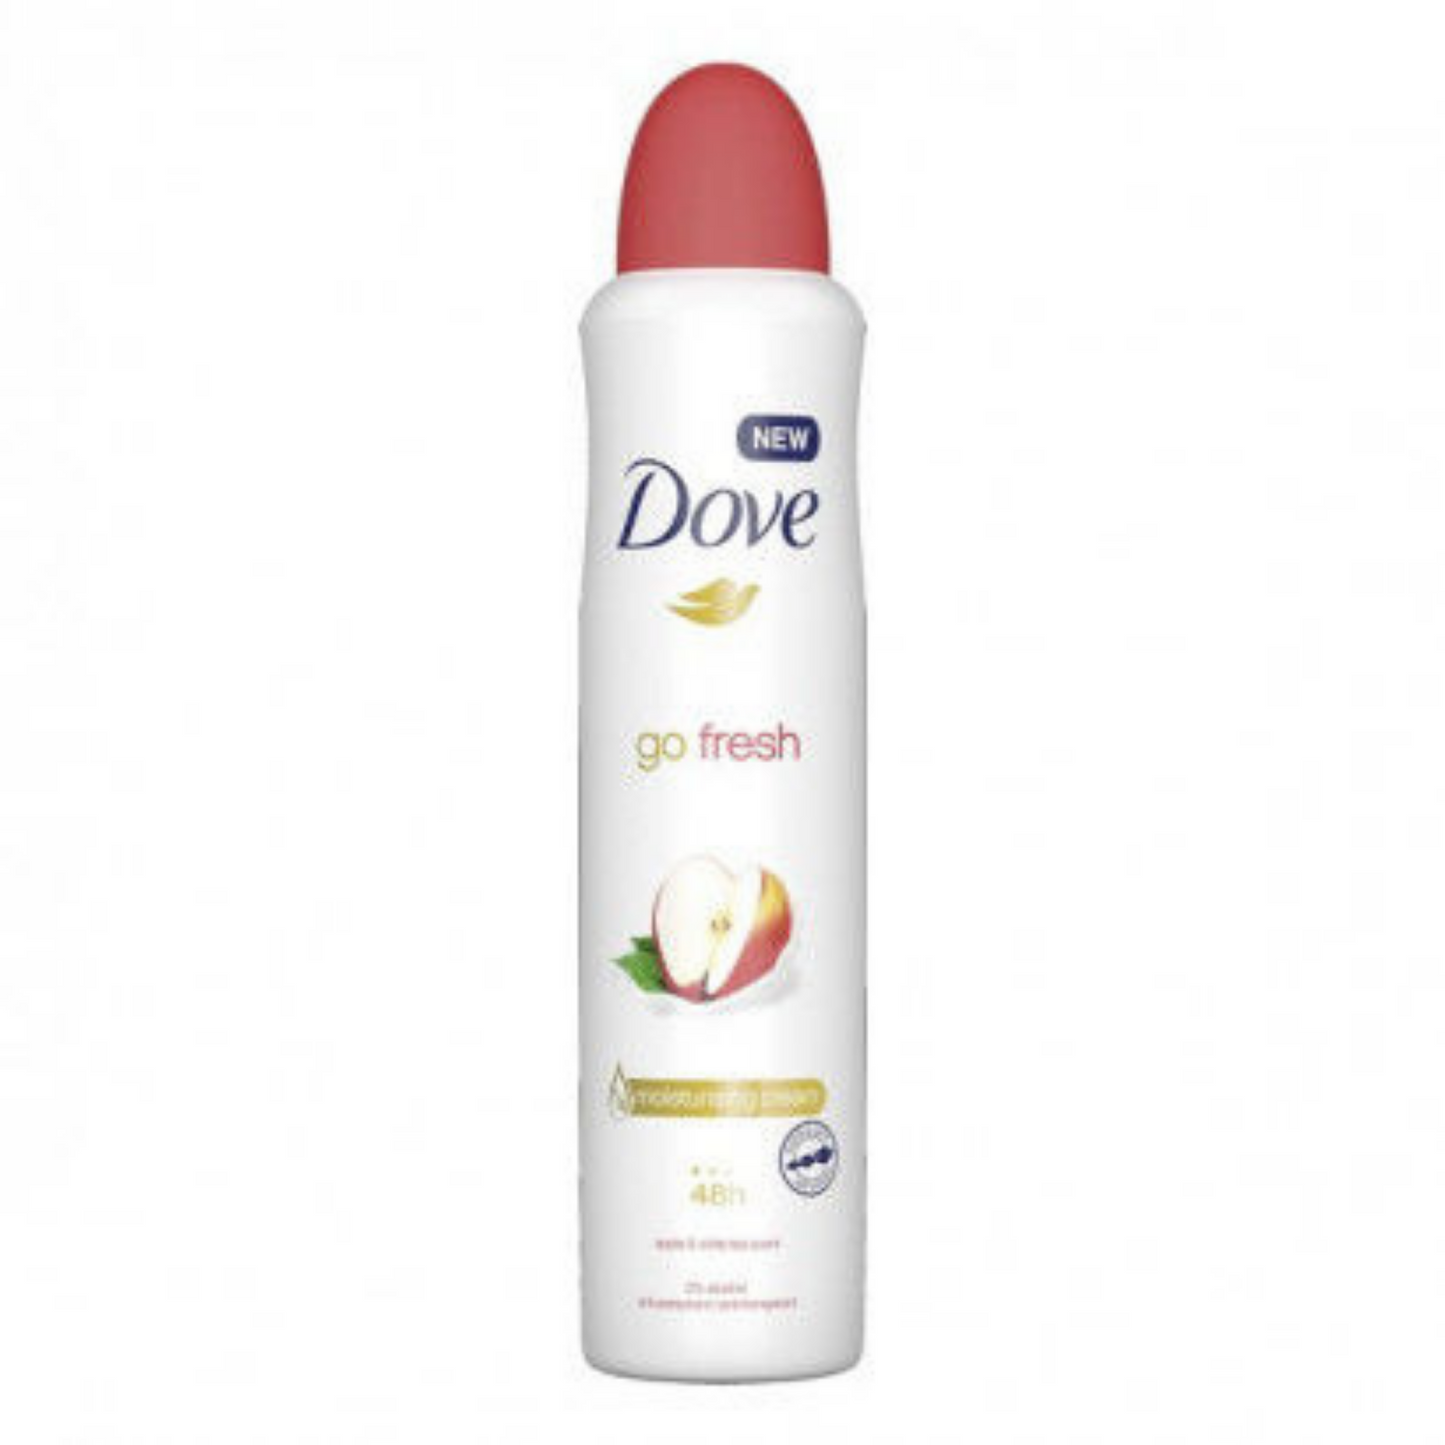 Dove GoFresh Body Spray - Apple - 107g pack of 6